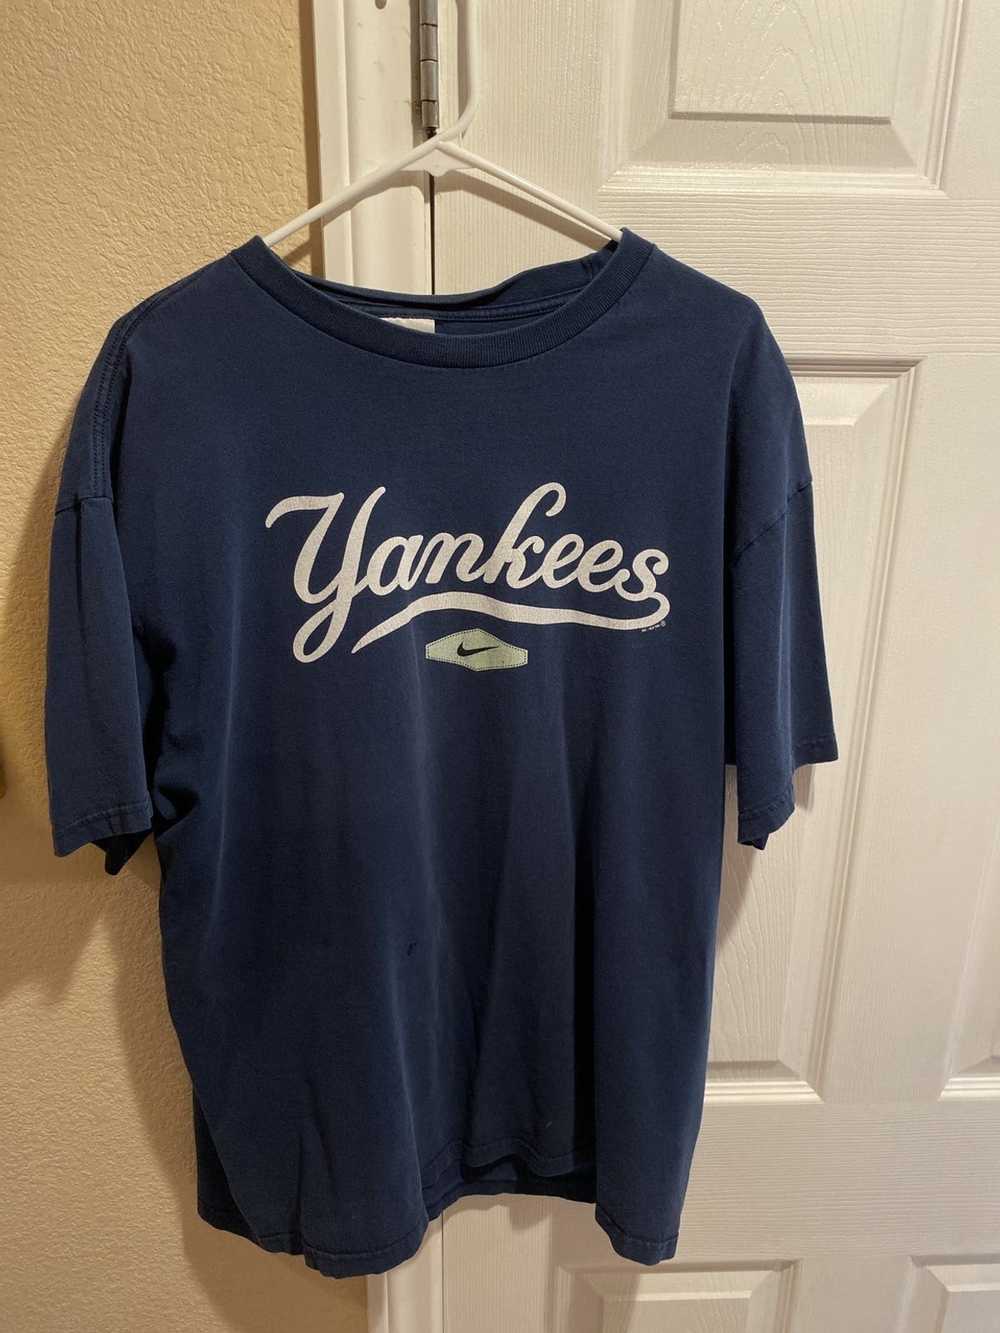 MLB, Shirts, Yankees Bootleg Boston Red Sox Suck Tshirt Xl